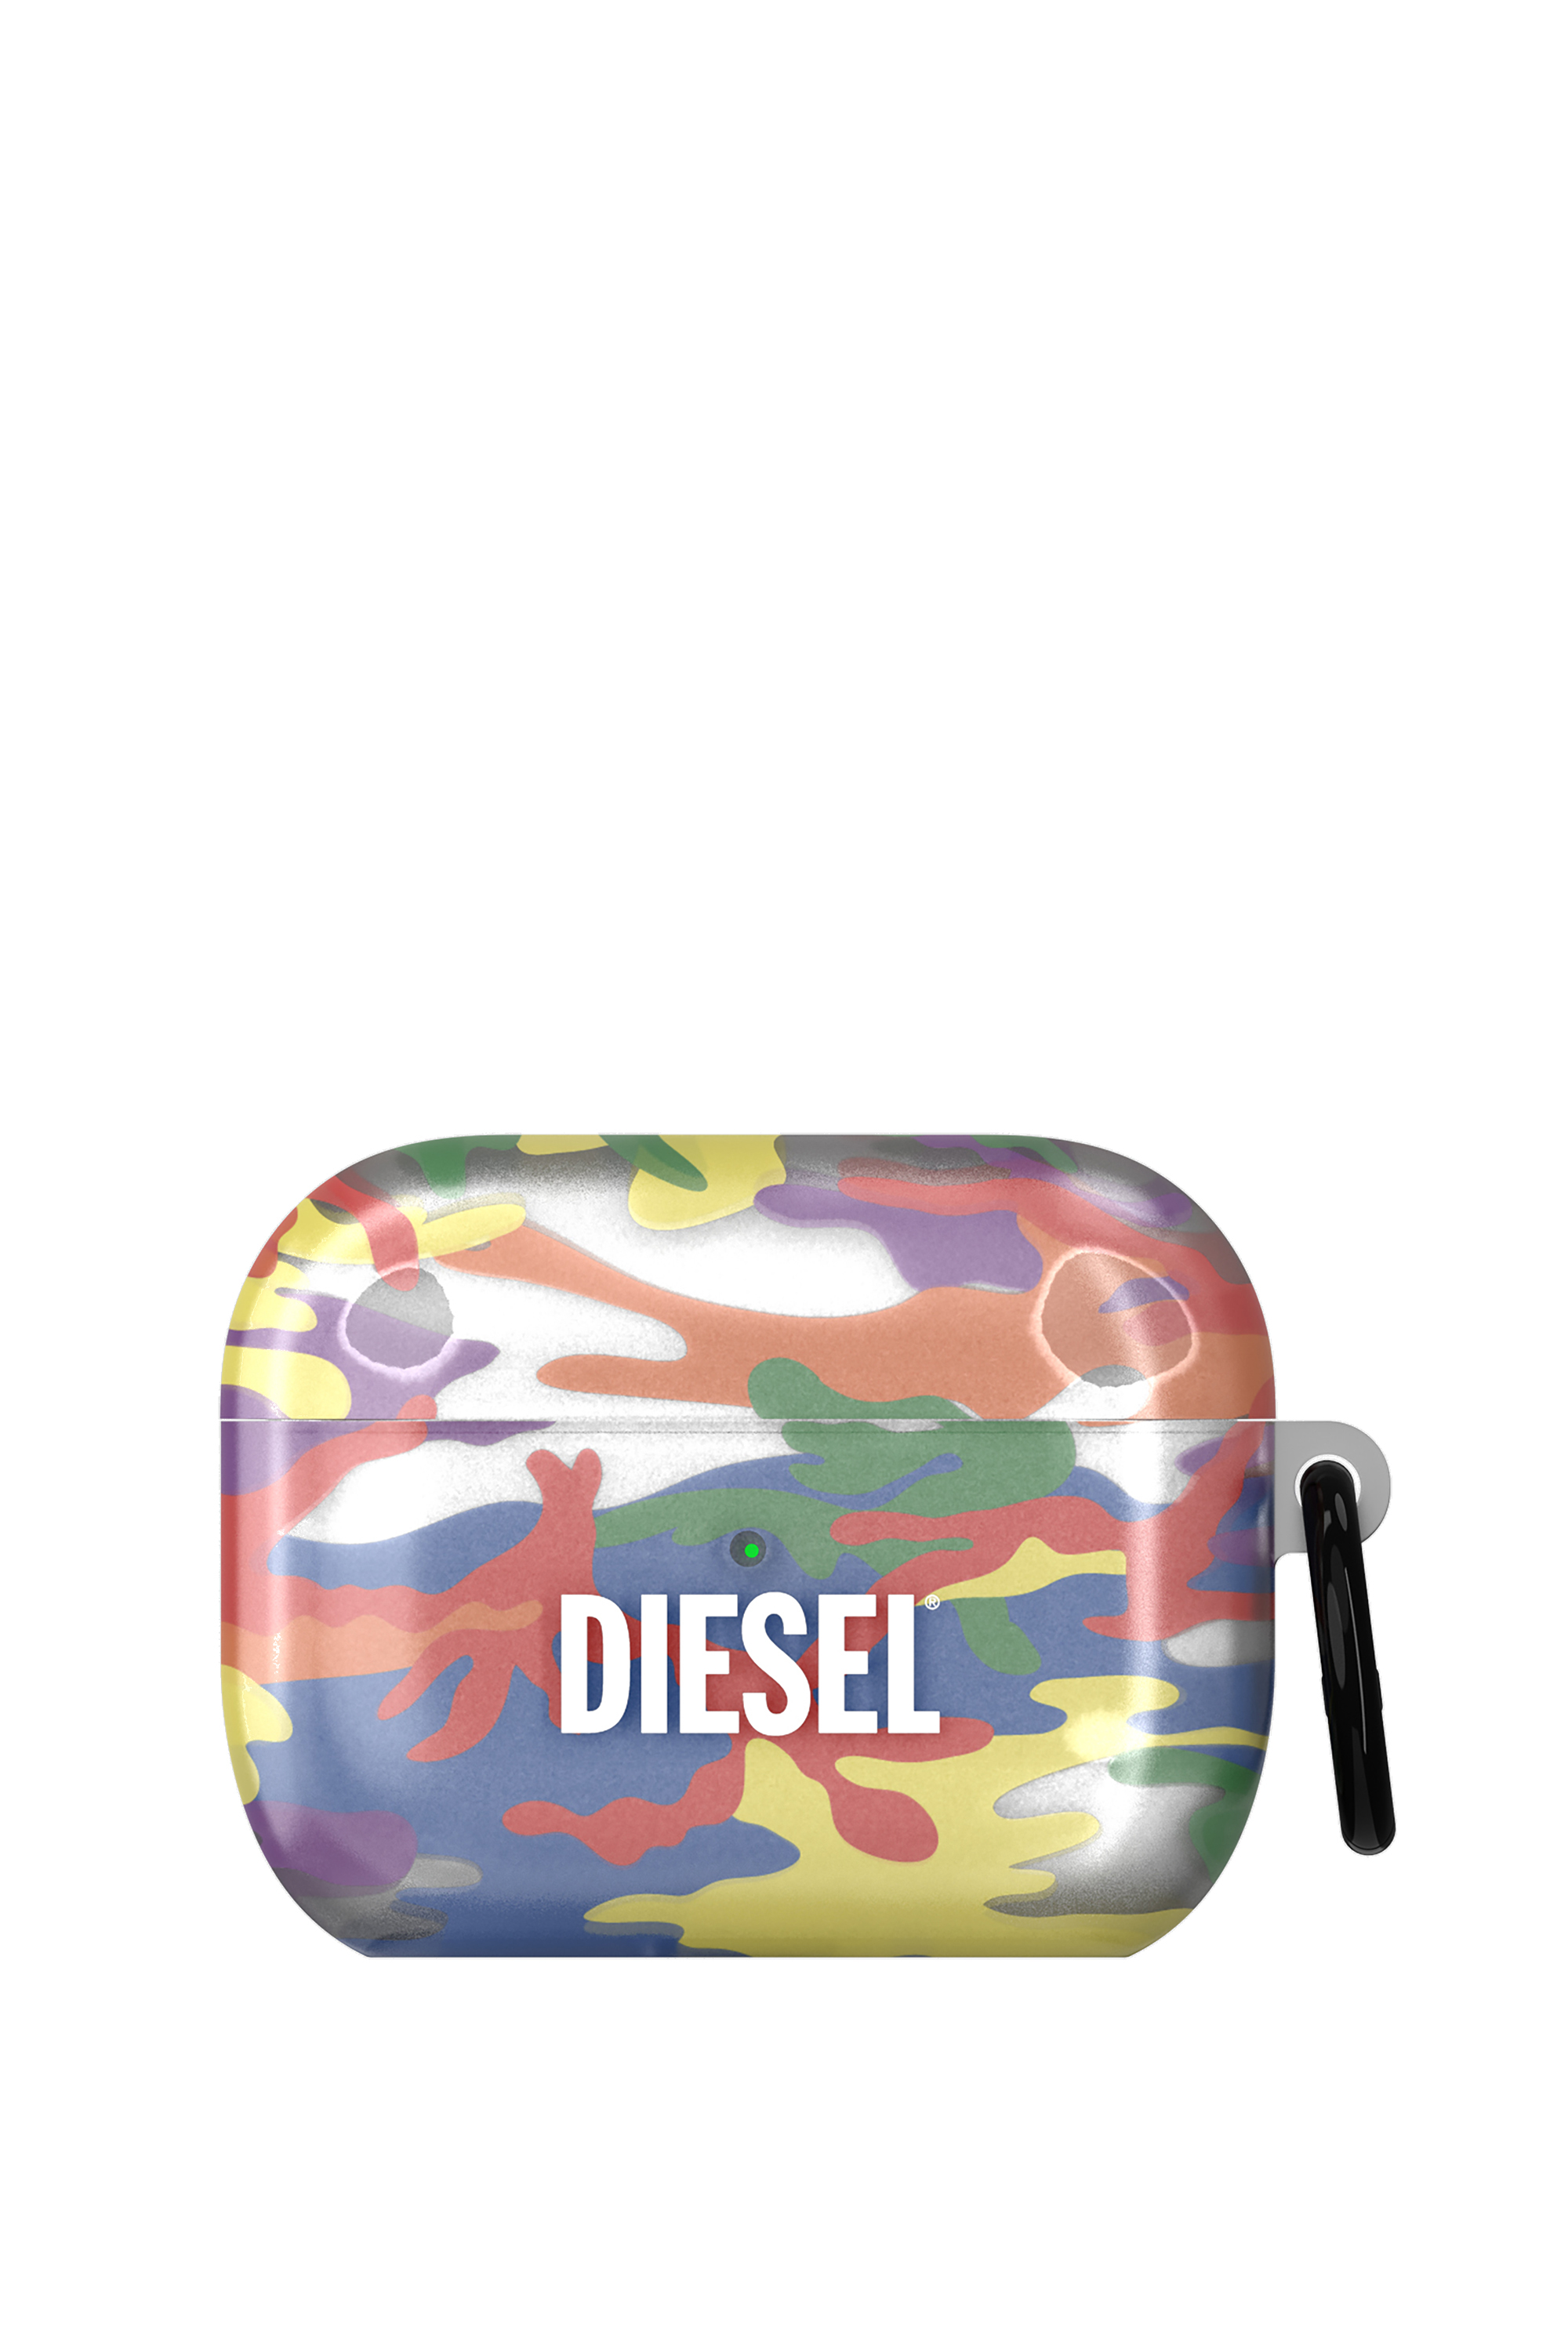 Diesel - 44344   AIRPOD CASE, Multicolor - Image 1